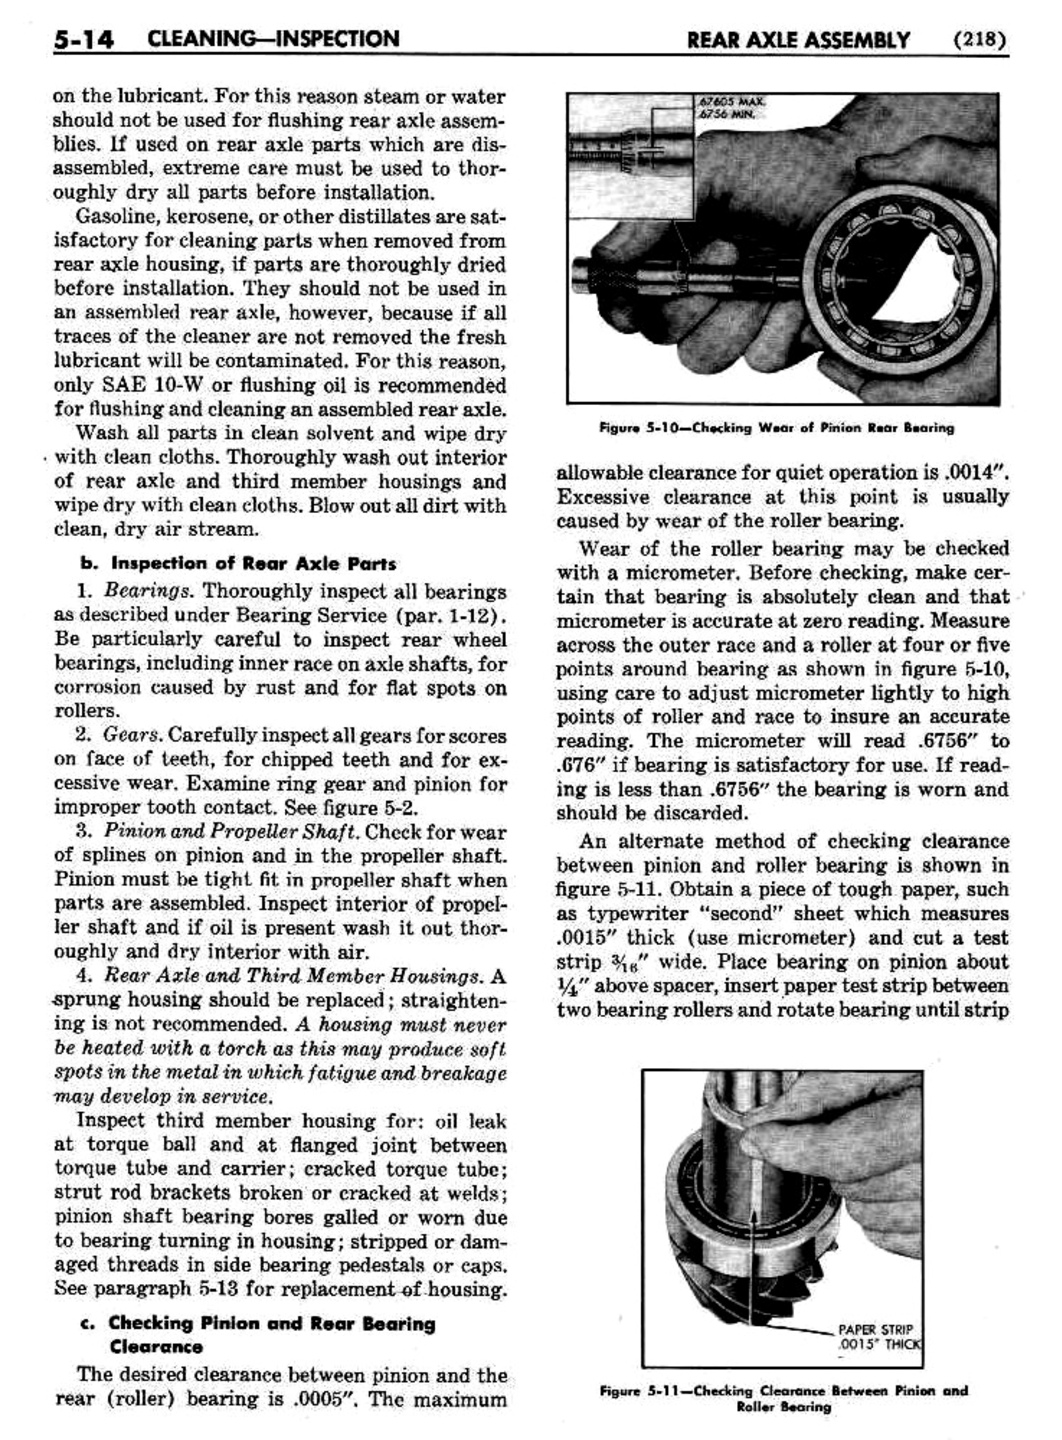 n_06 1951 Buick Shop Manual - Rear Axle-014-014.jpg